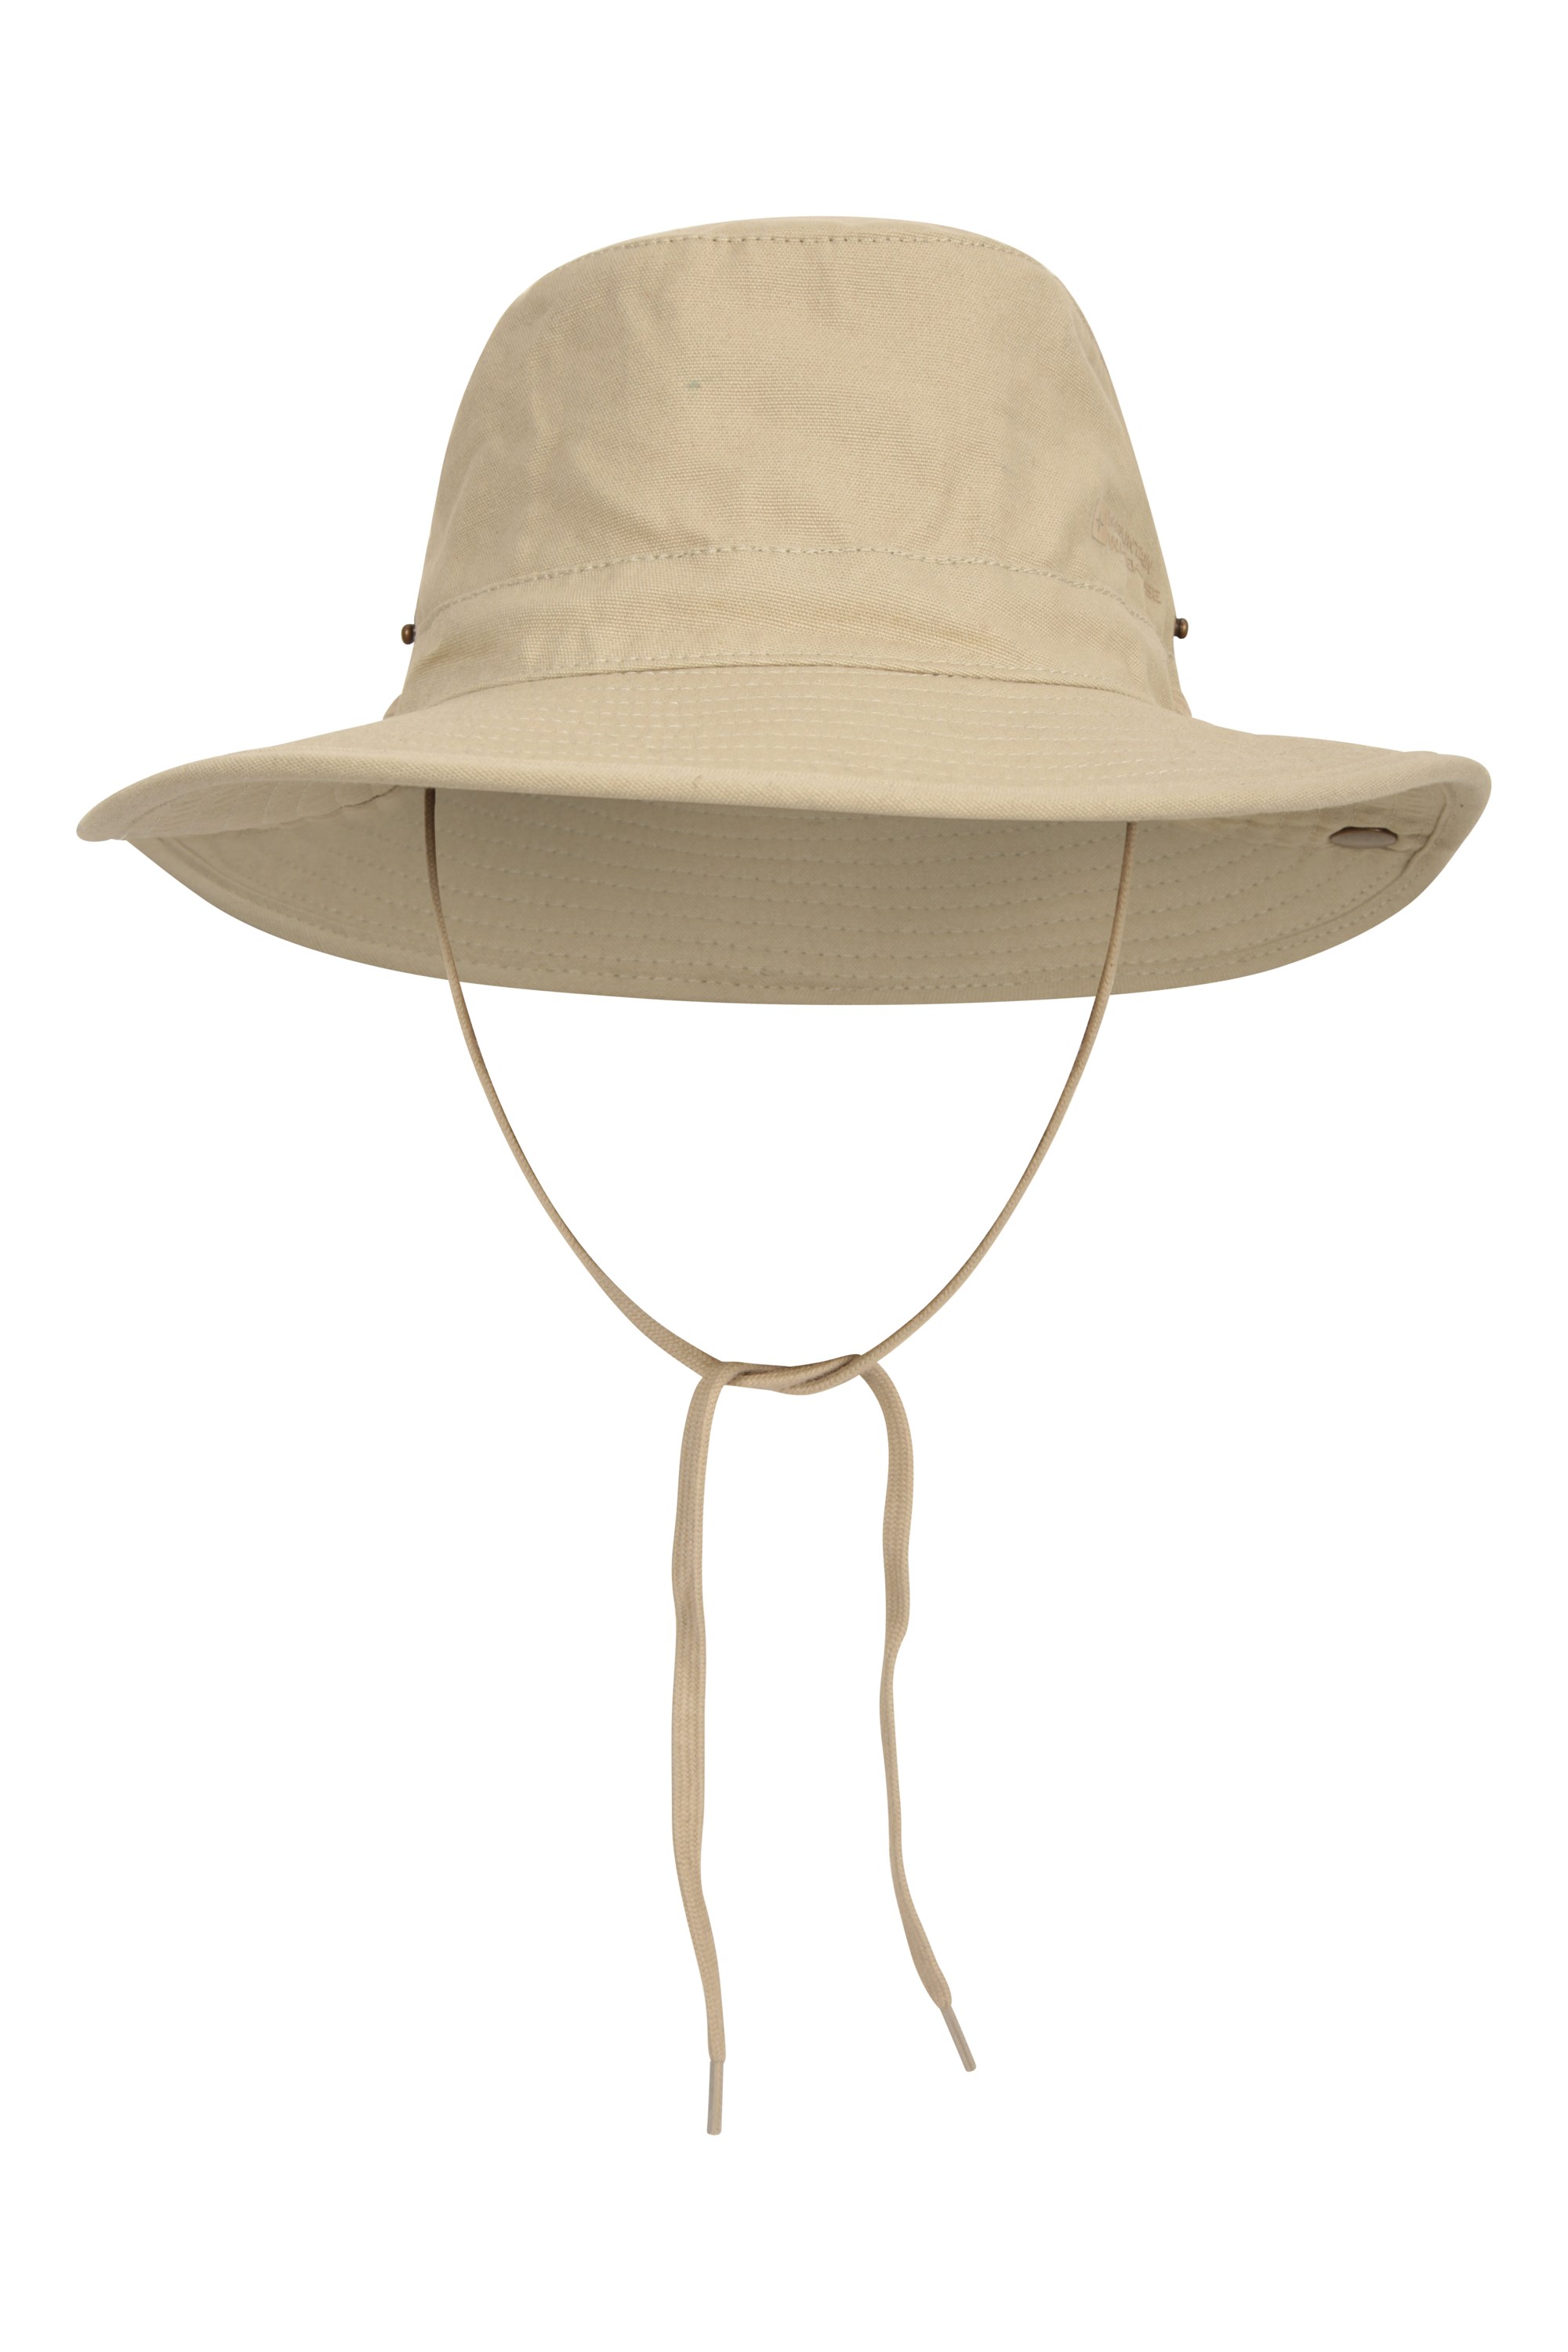 Buy Mountain Warehouse Blue Travel Anti-Mosquito Brim Hat - Mens